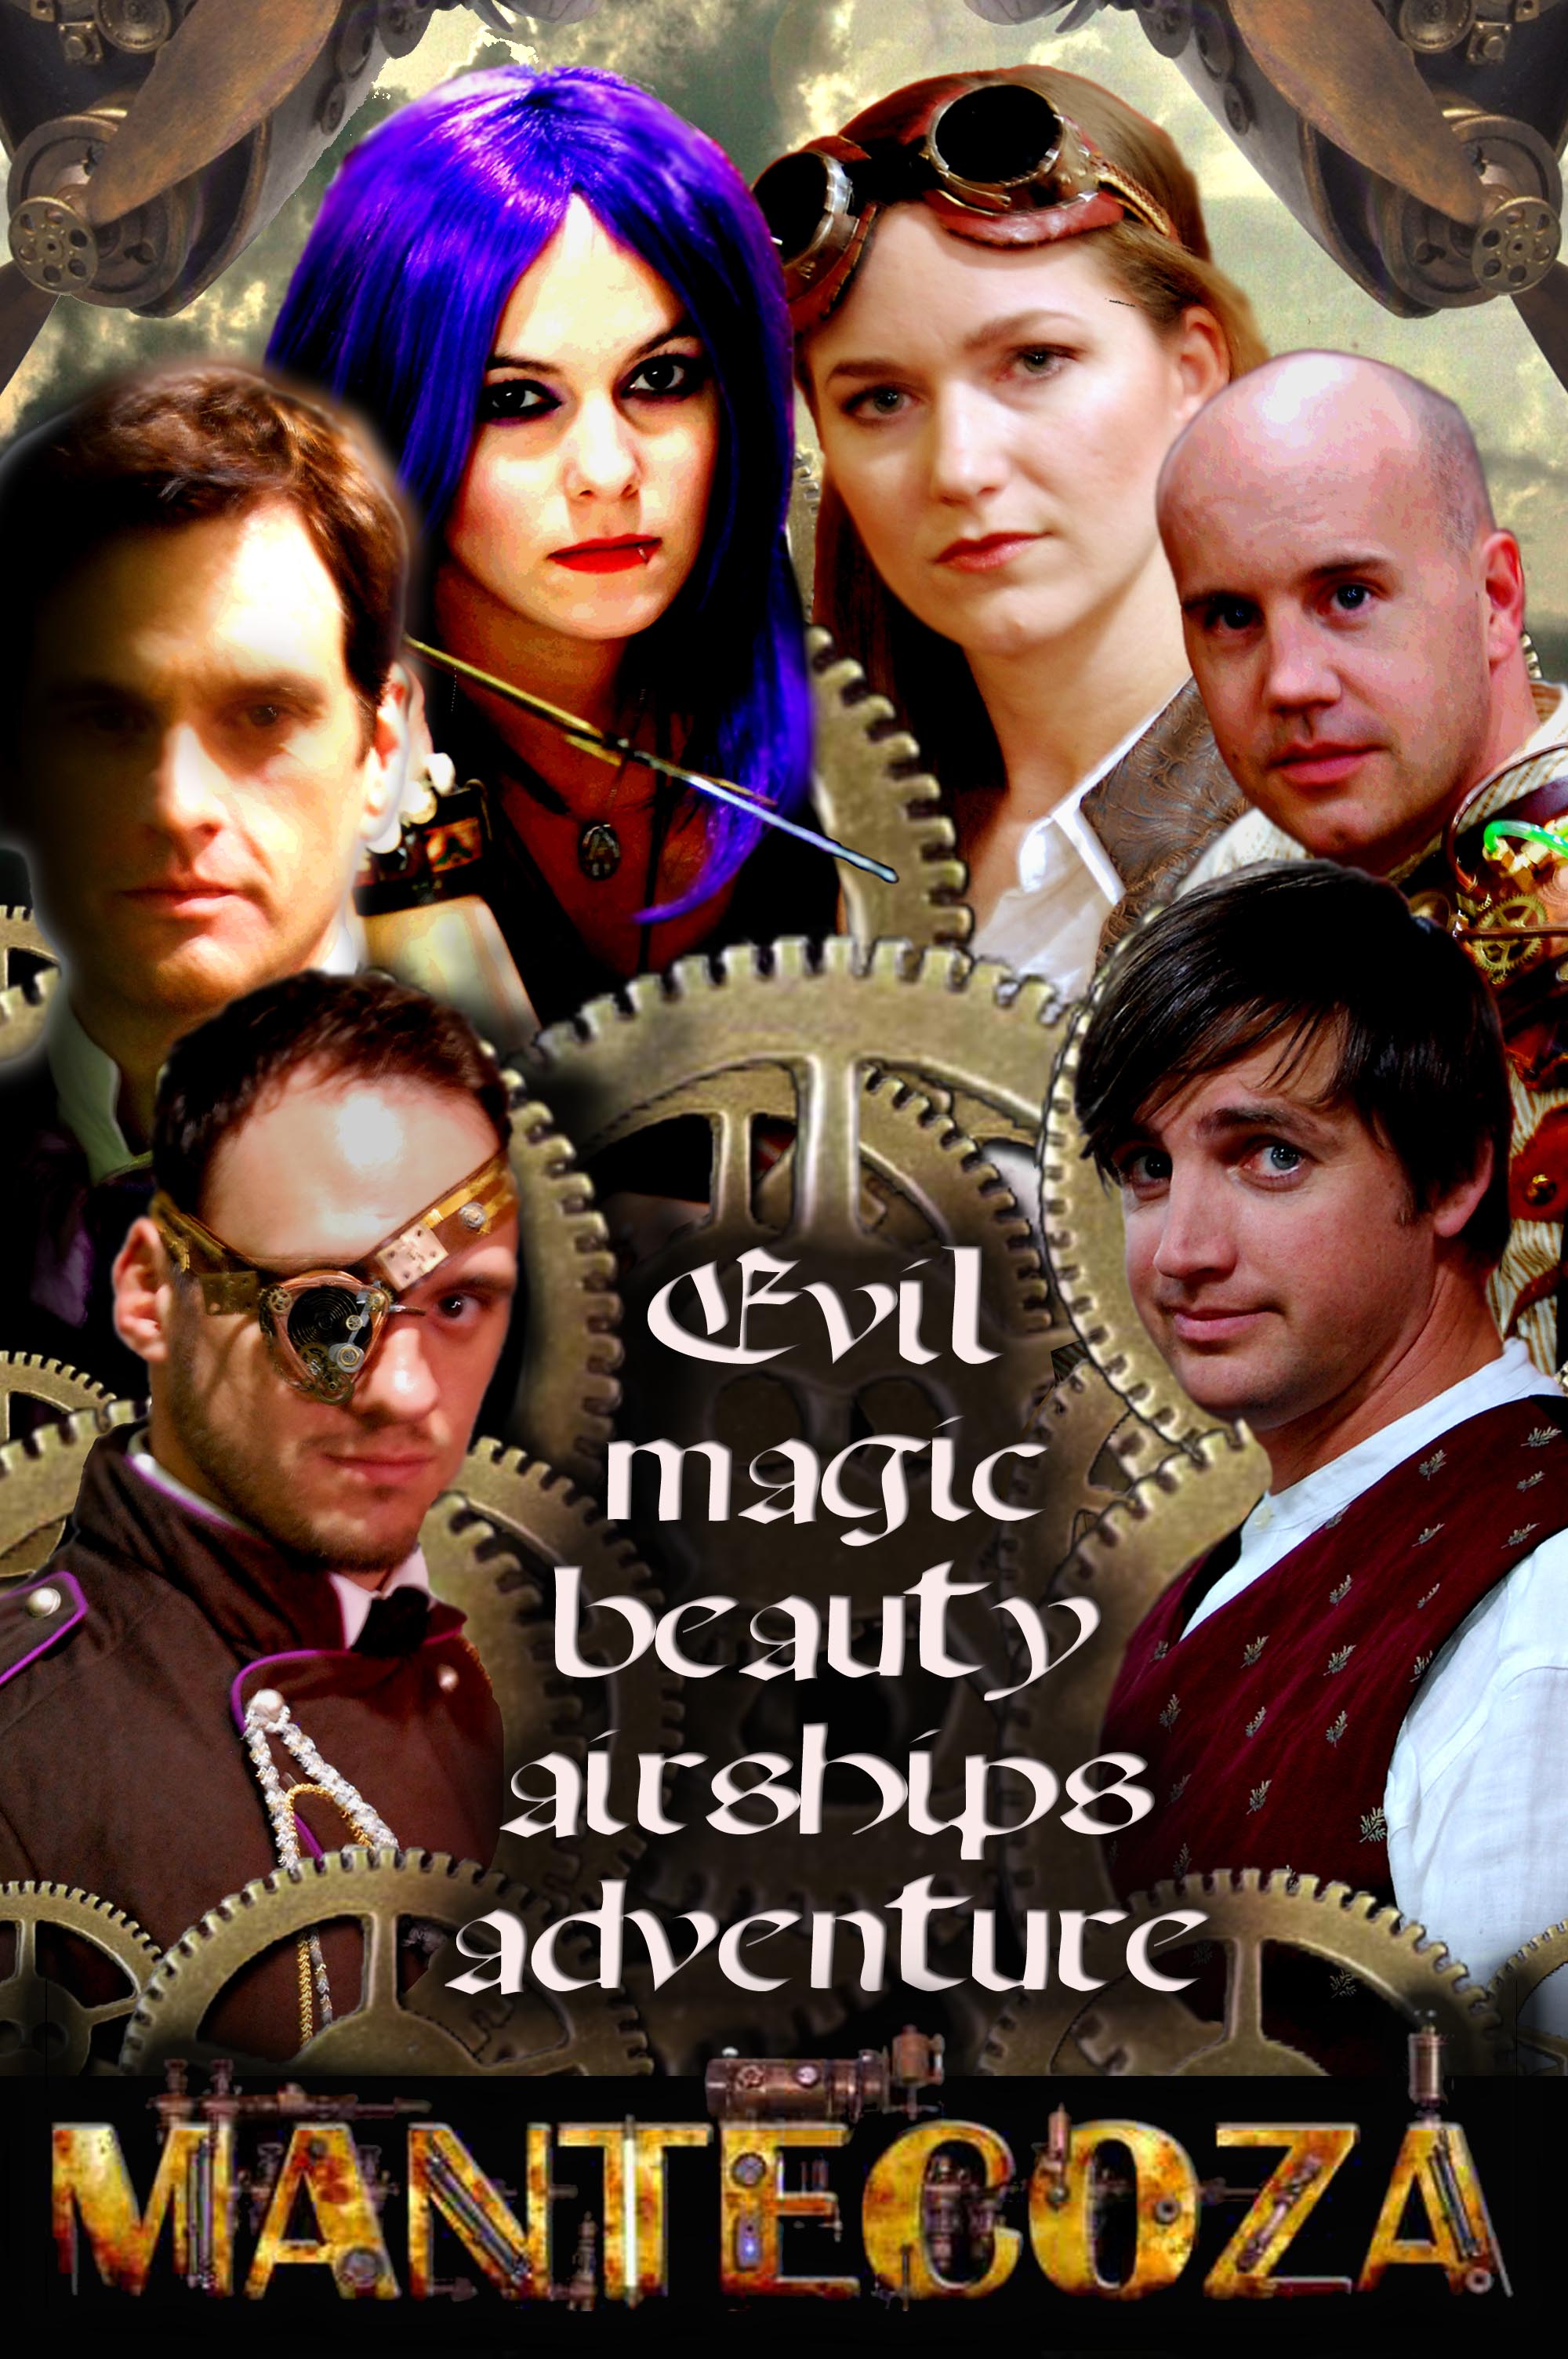 Poster for steampunk series/film Mantecoza. www.facebook.com/Mantecoza